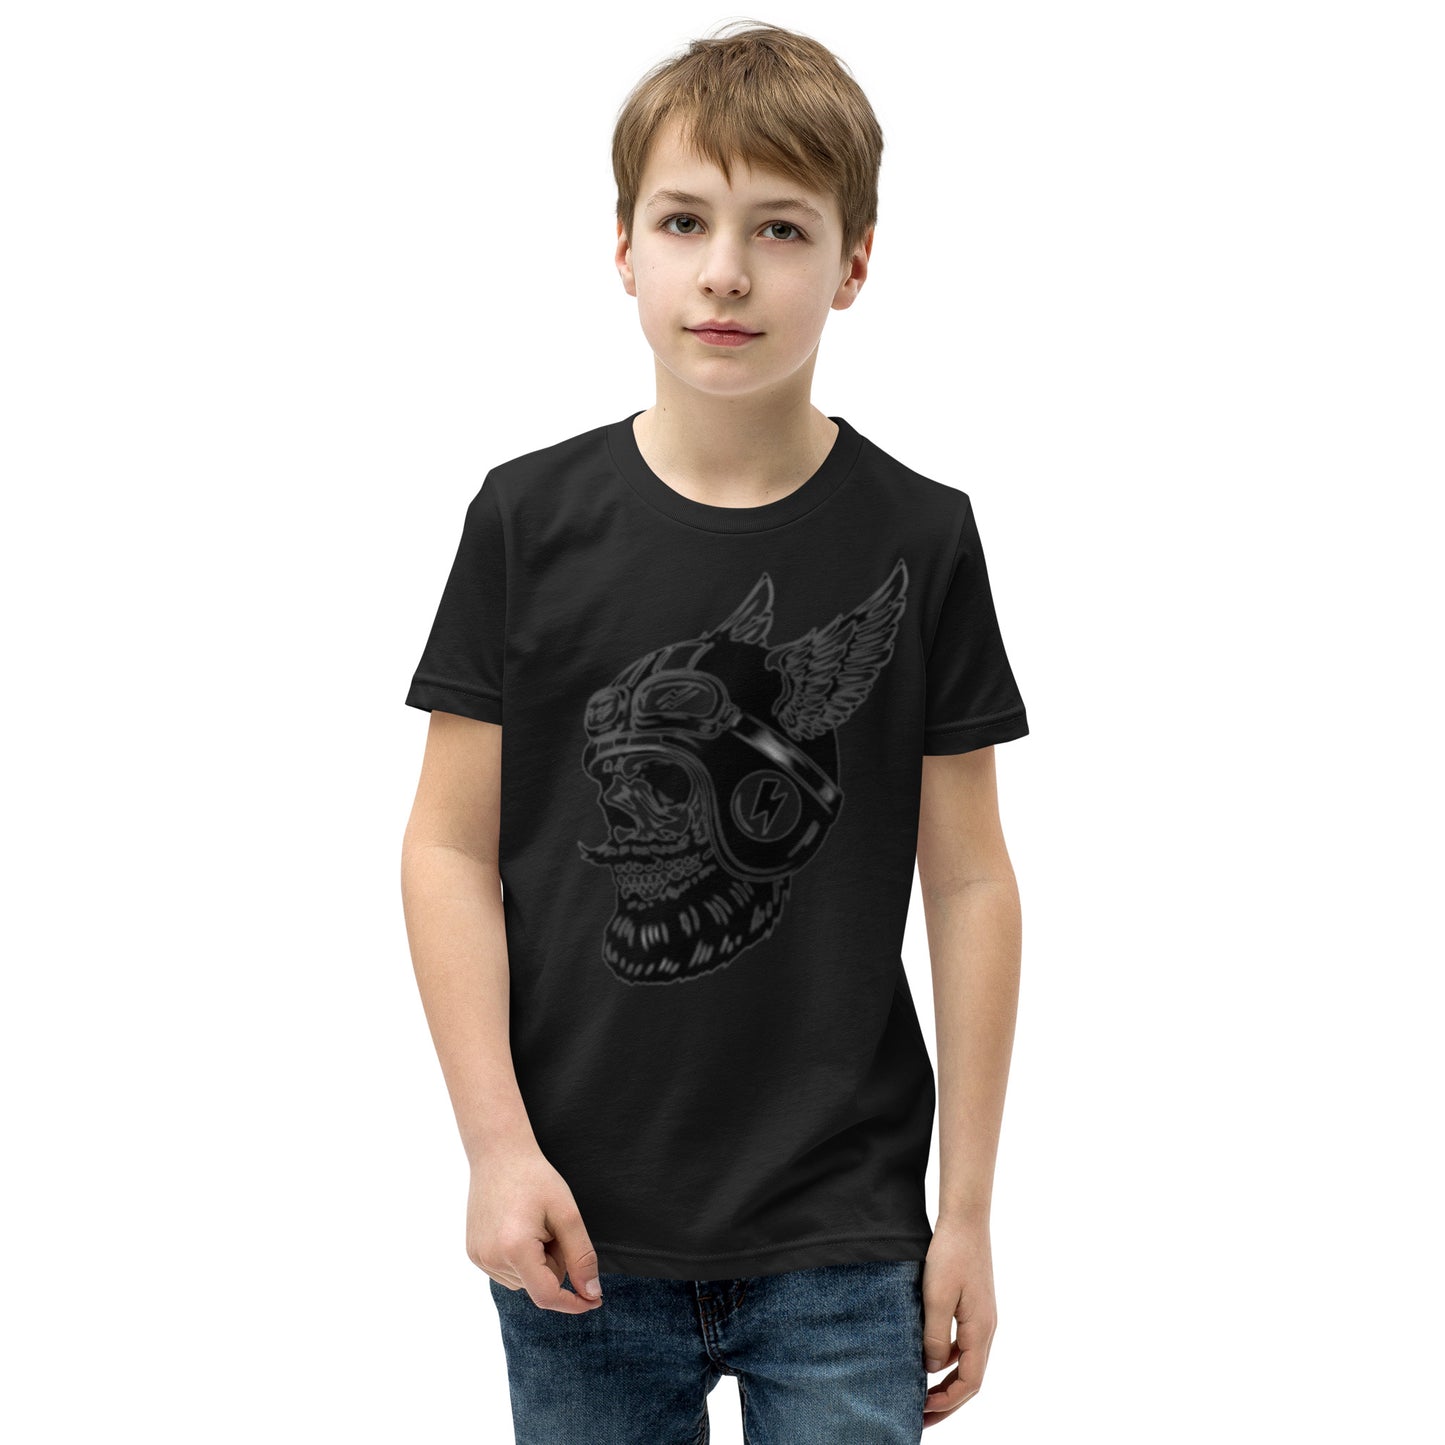 Voodoo Machine Co. Youth Short Sleeve T-Shirt